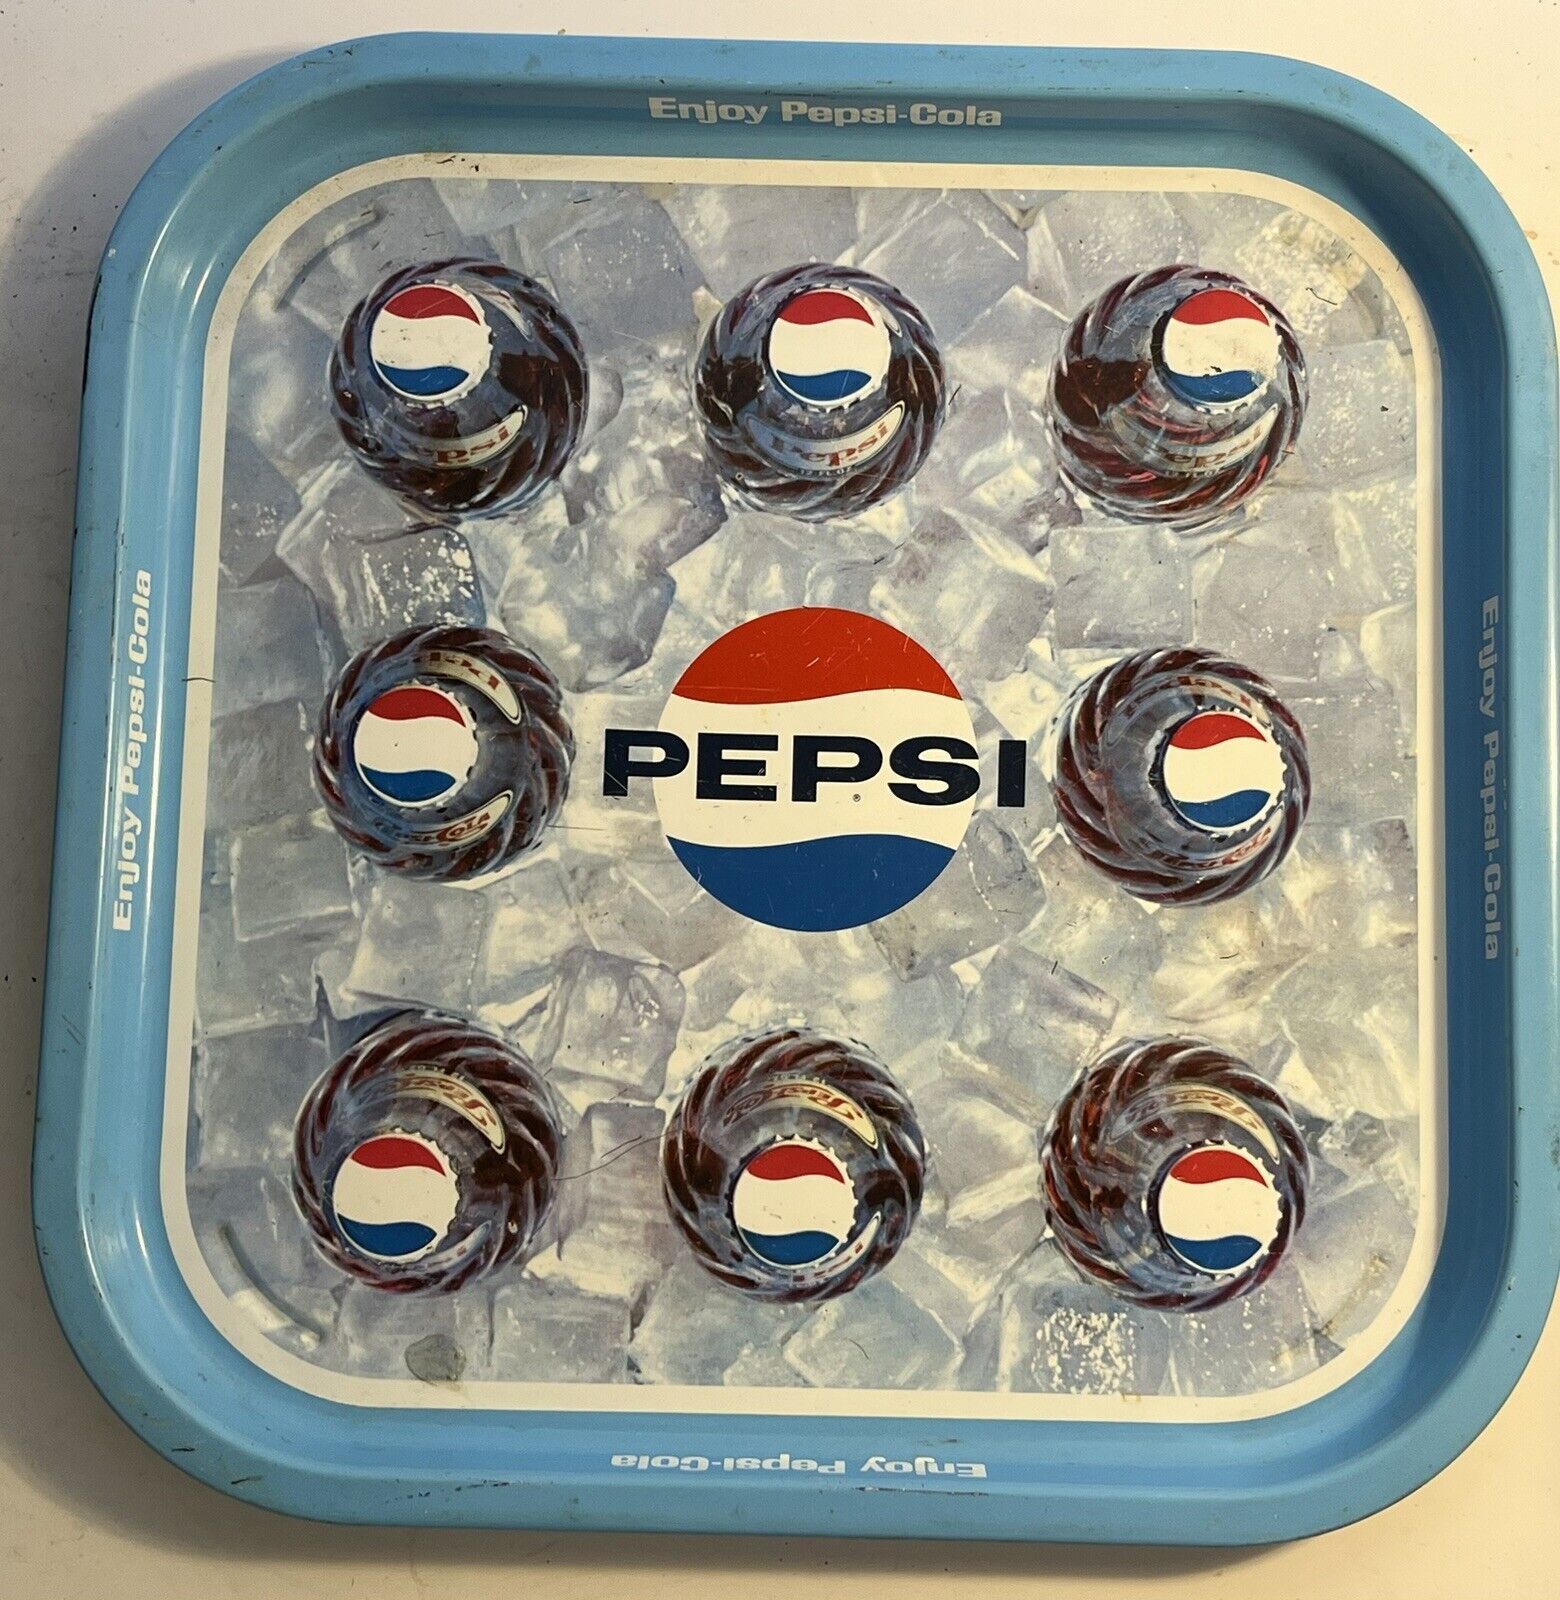 Vintage 1960s Pepsi Cola Pop Soda Advertising Tray Bar Serving Tray 13 1/4”